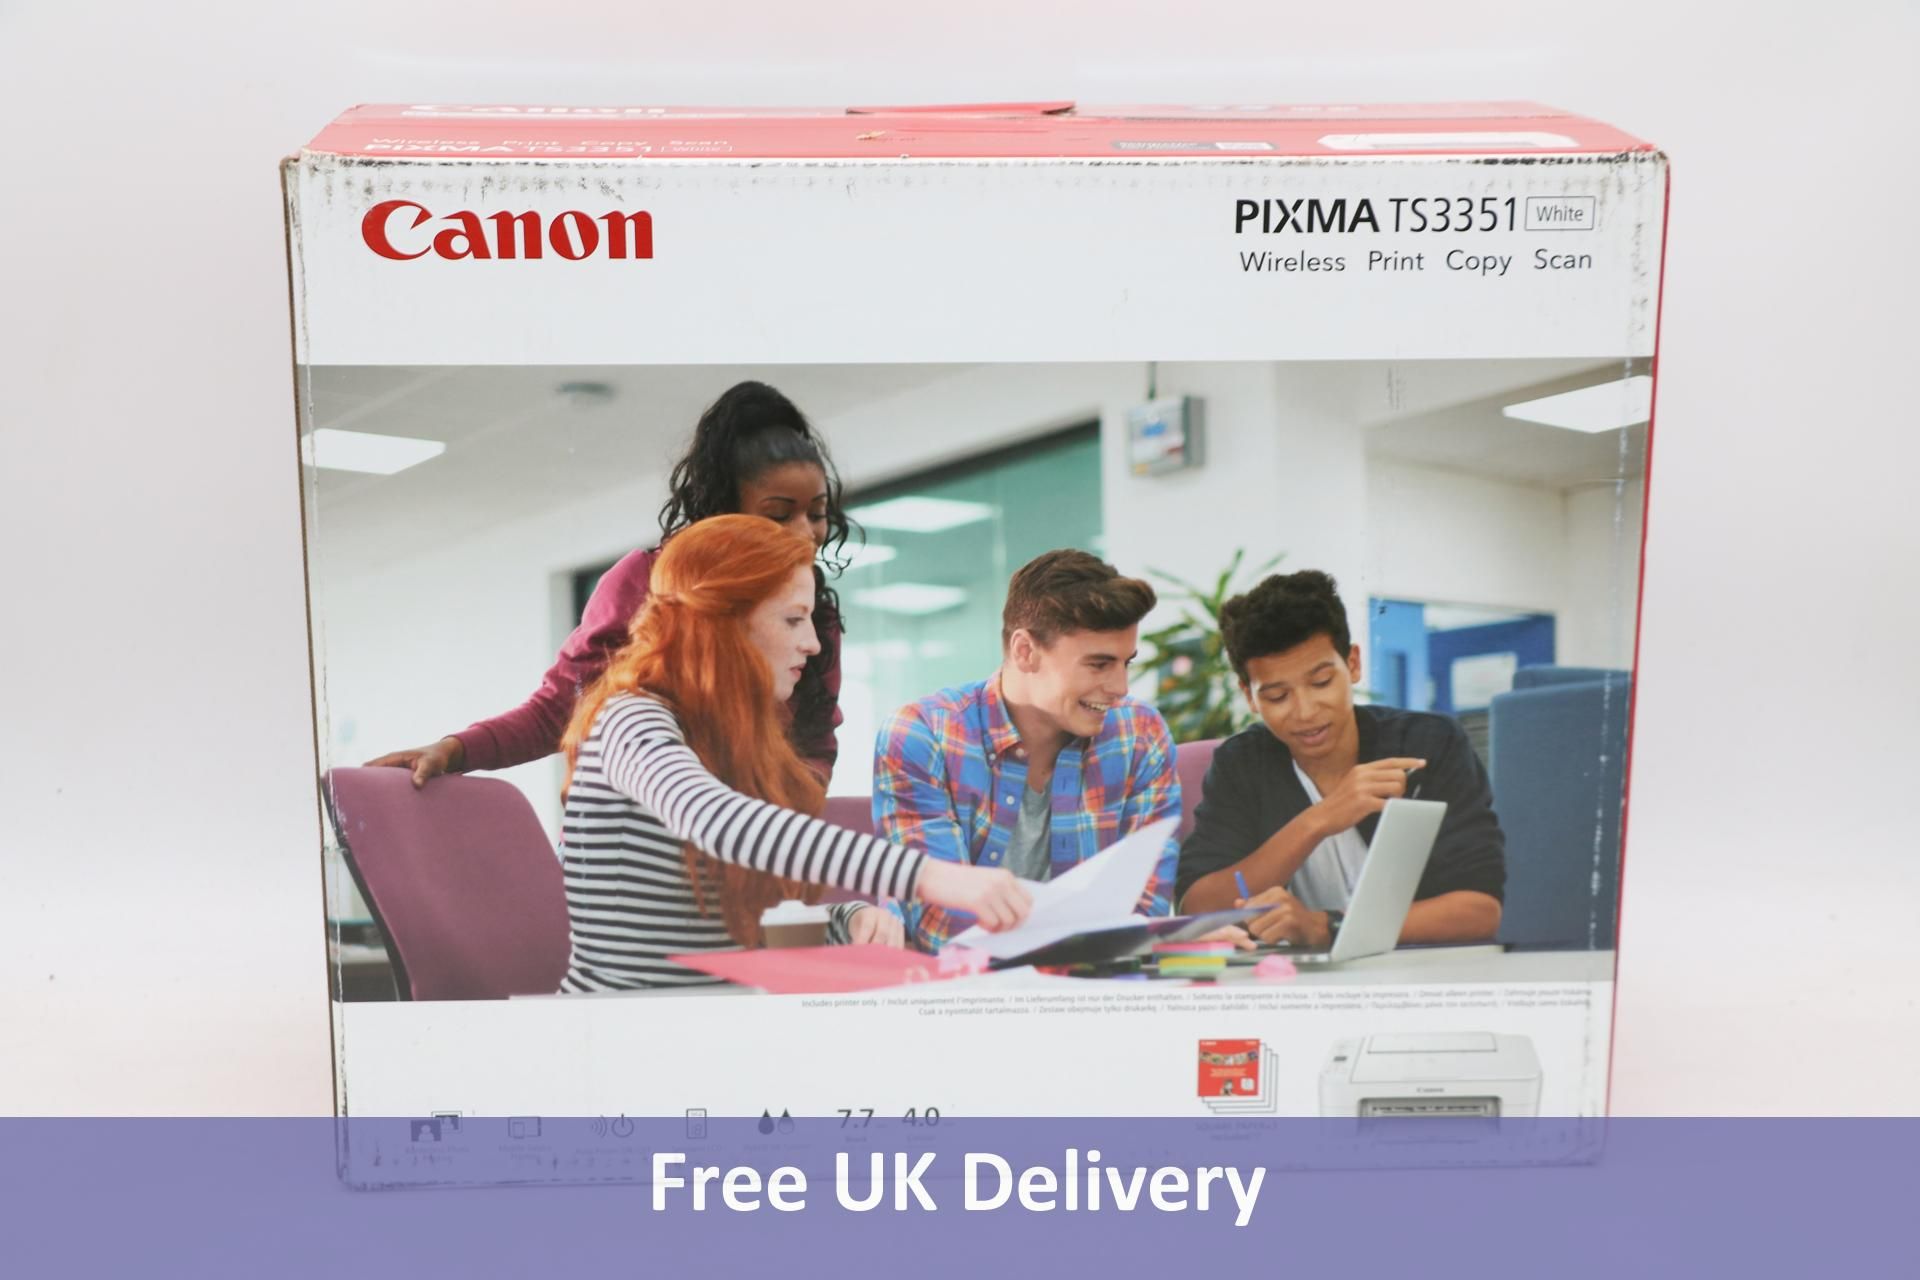 Canon PIXMA TS3351 Wireless Print Copy Scan. Box damaged